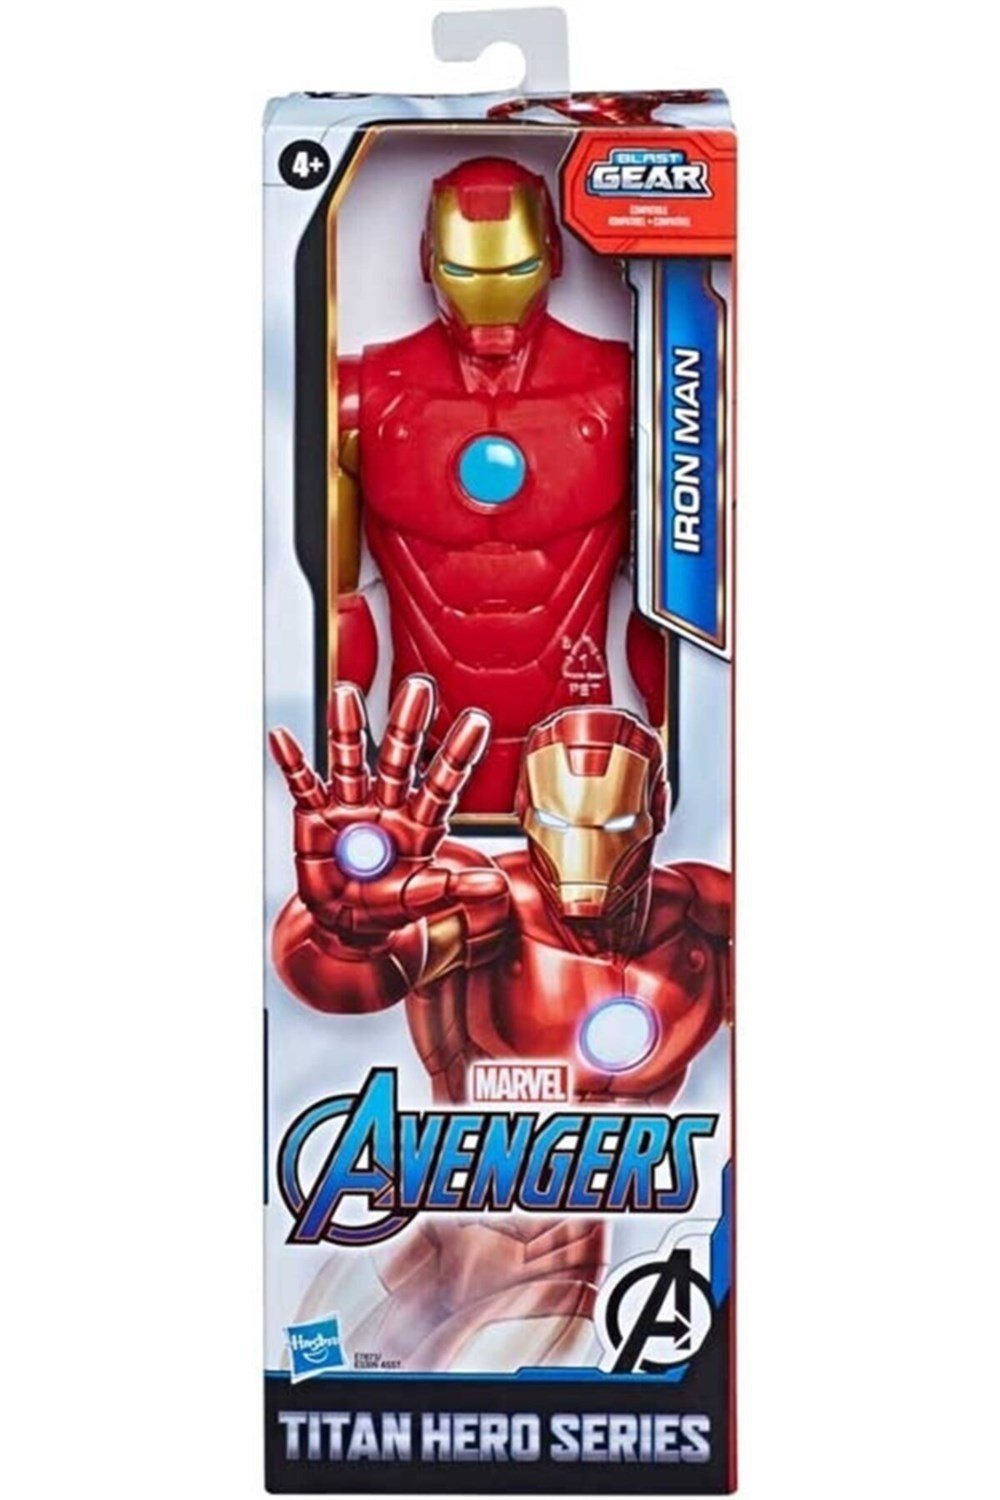 Avengers Endgame Titan Hero Figür Iron Man E3309-e7873 - Hasbro Oyuncak -  5010993669103 - Oyuncak & Lego